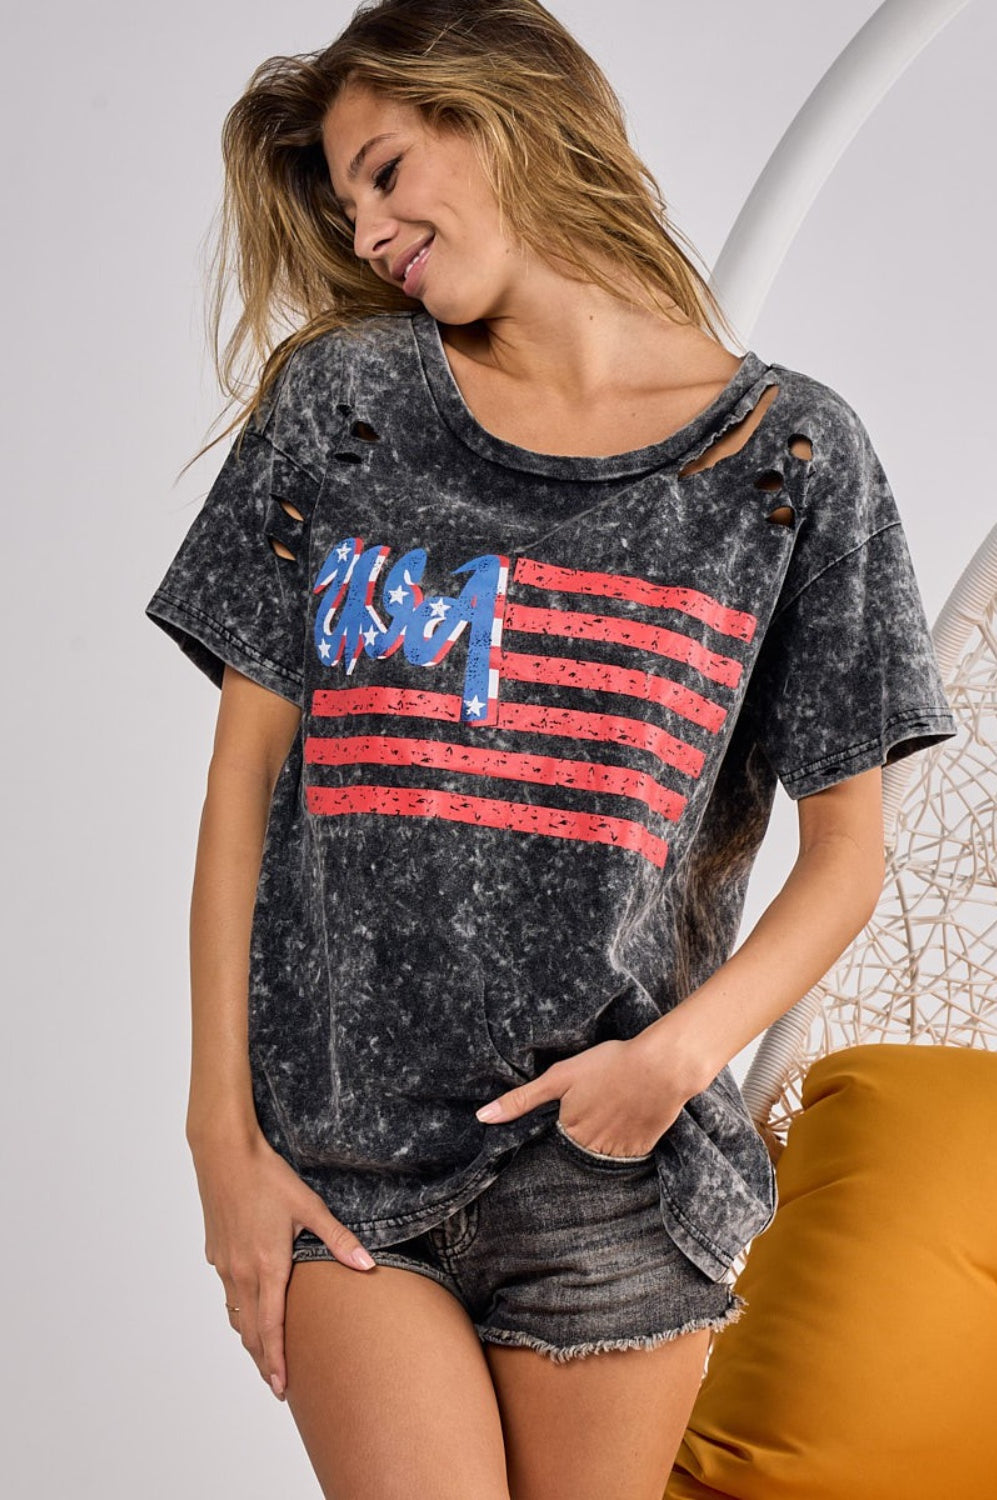 BiBi US Flag Washed Laser Cut T-Shirt Trendsi